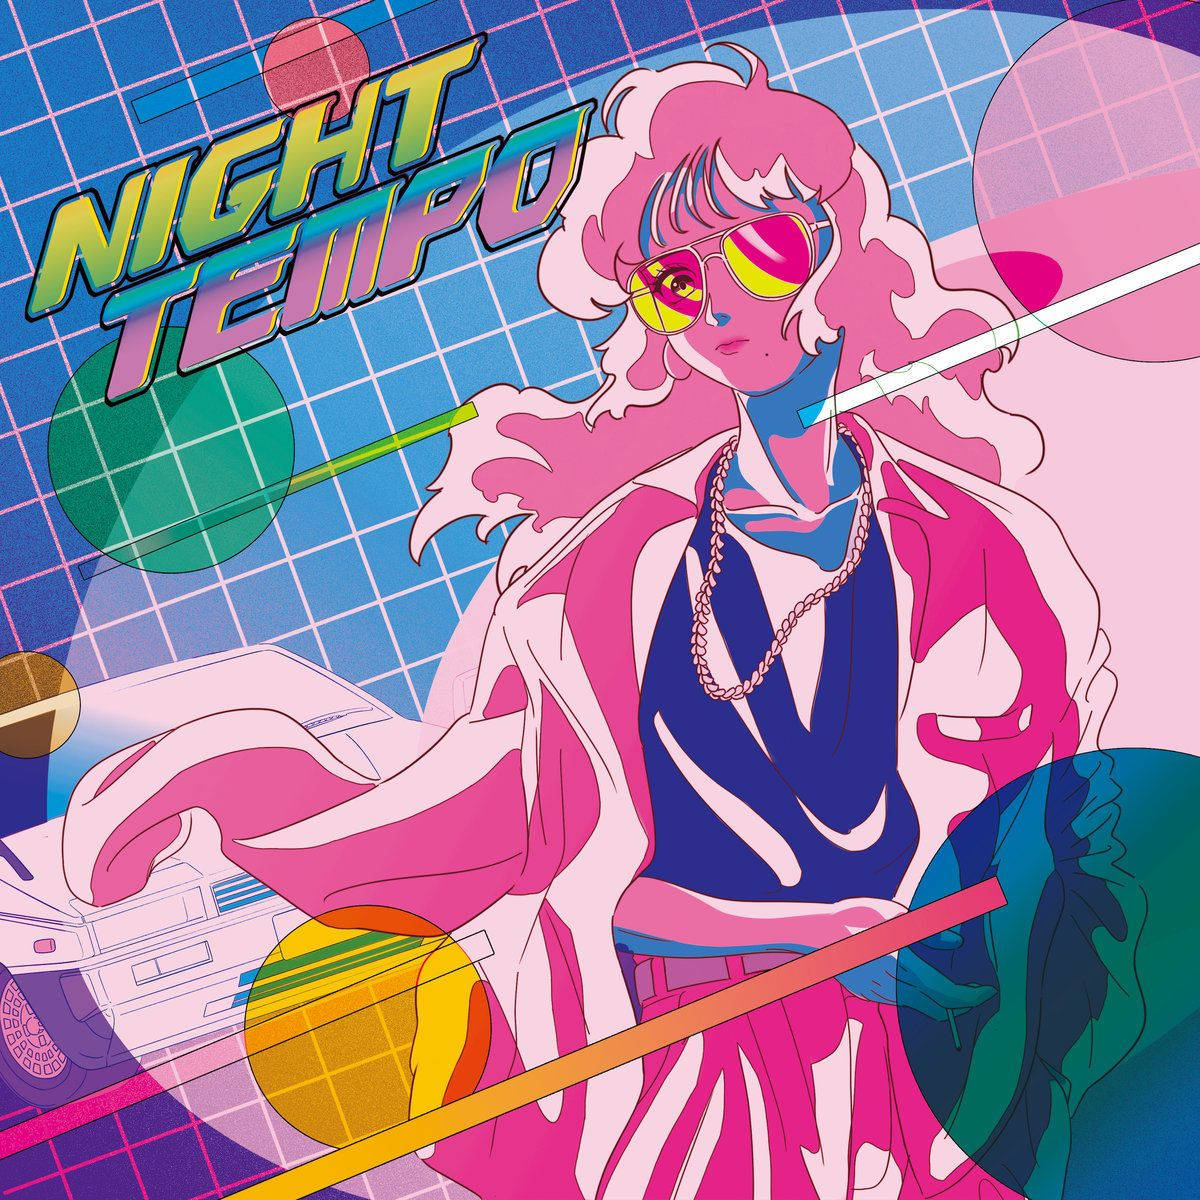 Nighty Tape ‘86 Retro Anime Aesthetic Wallpaper